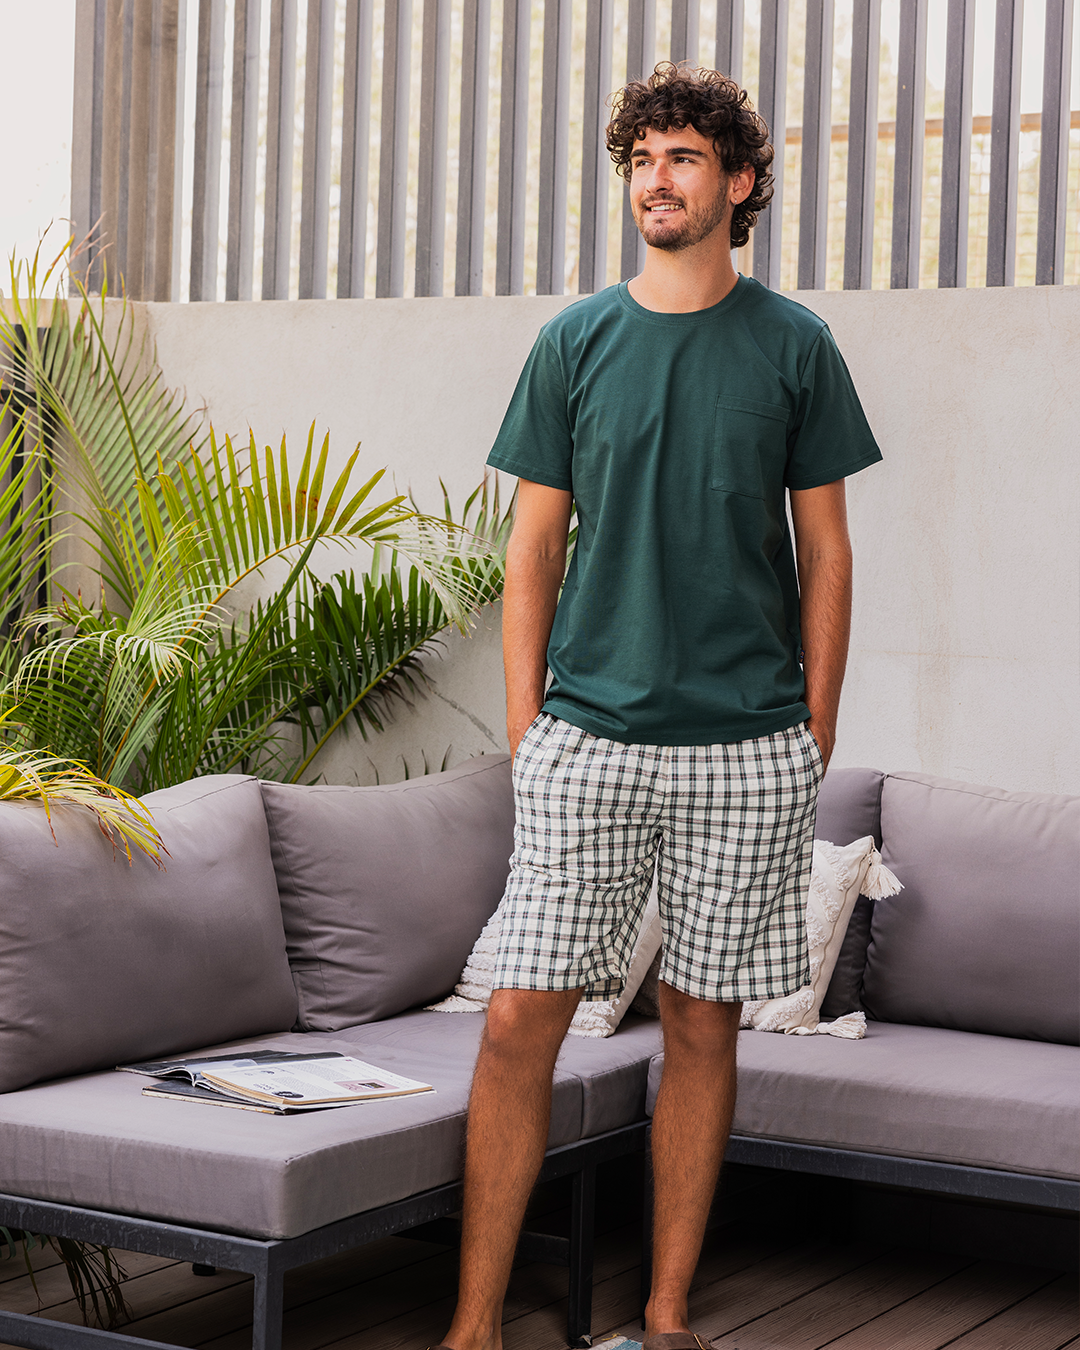 Men's pajama shorts